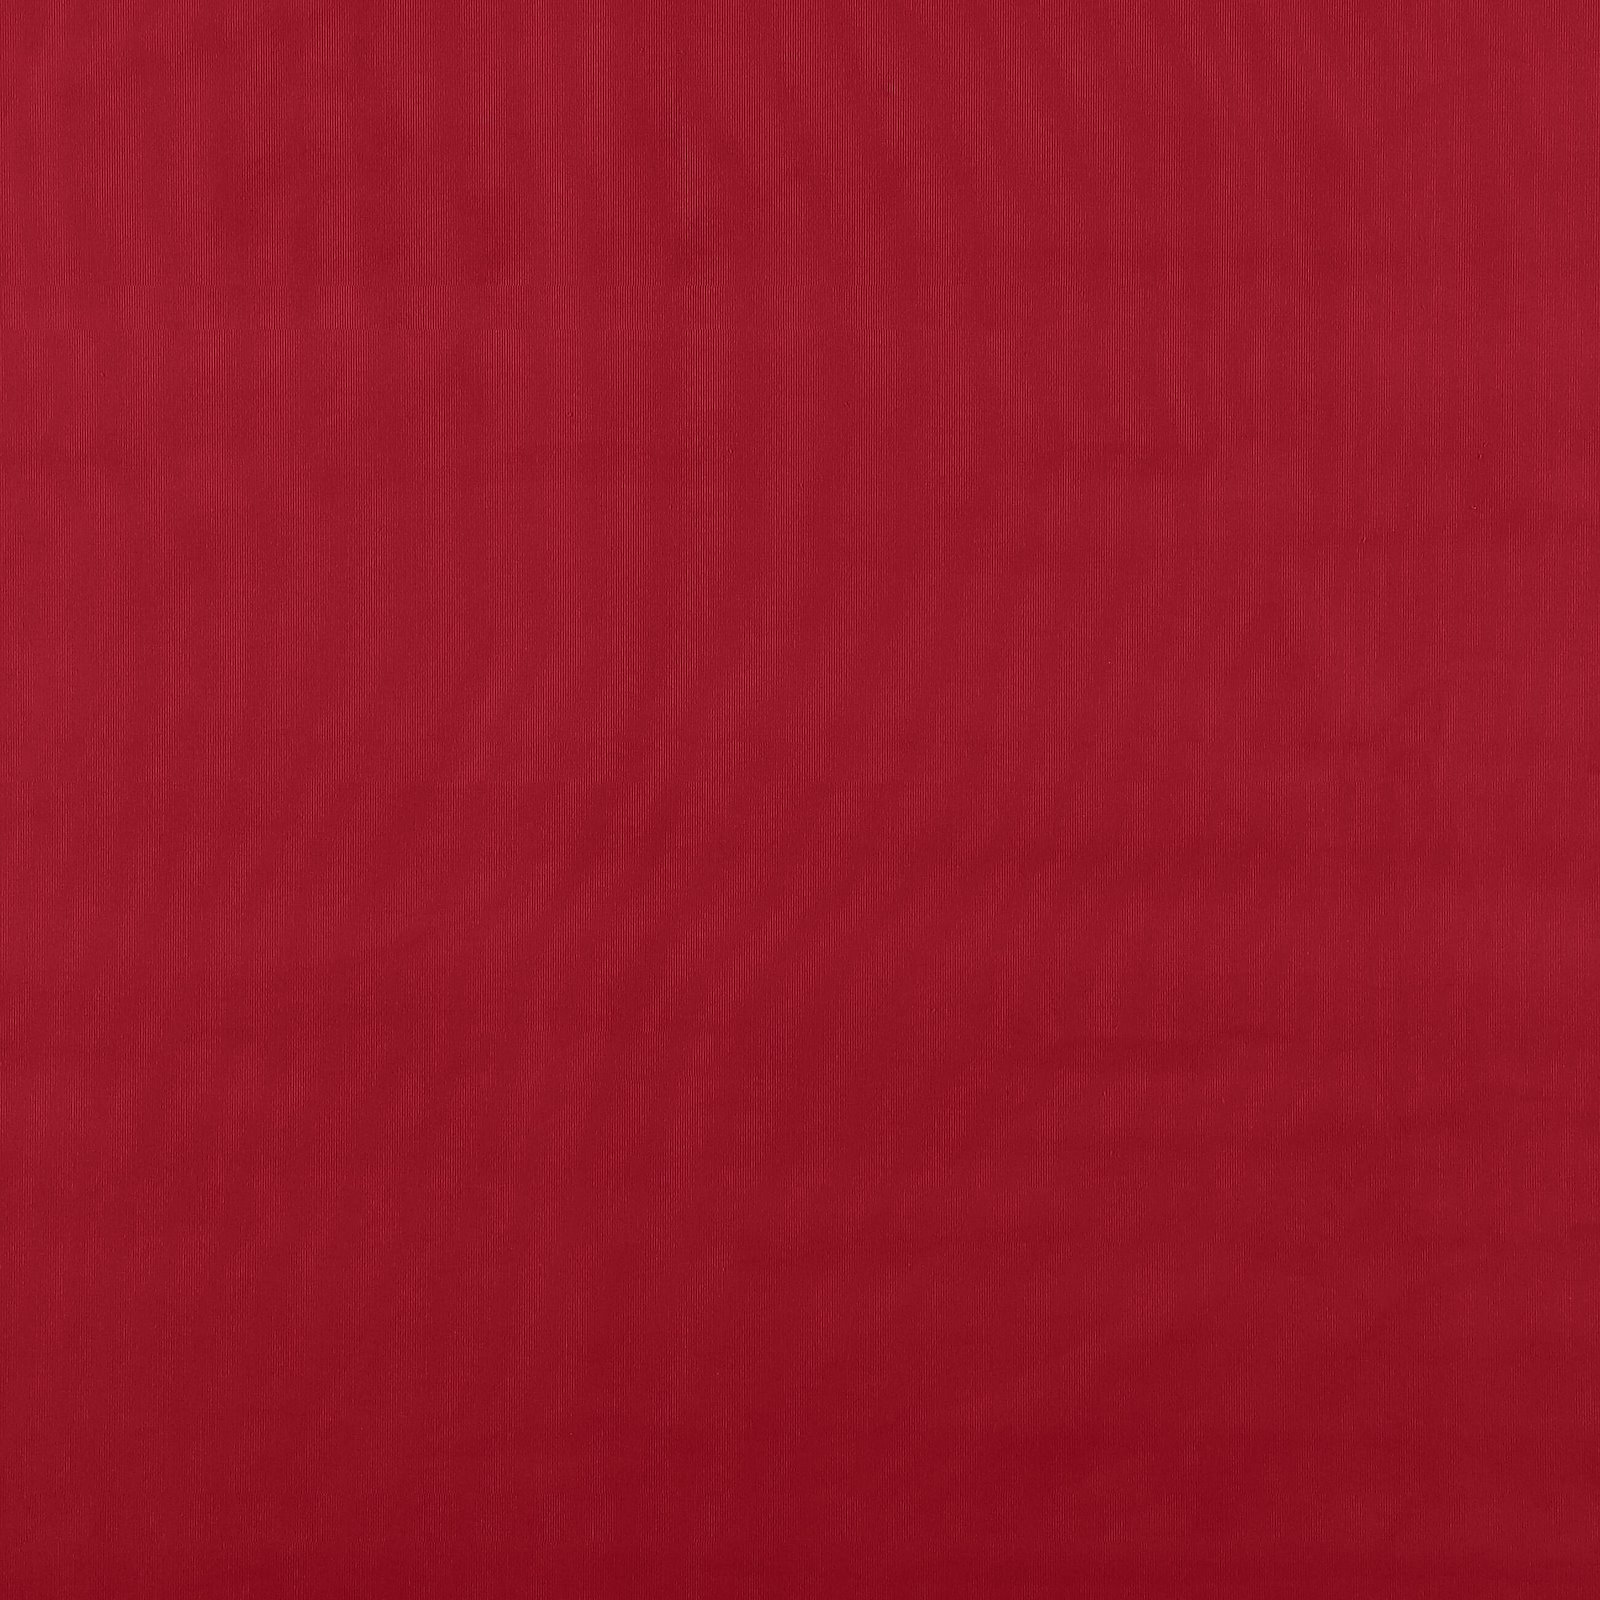 Smalspårig manchester 21 wales röd 430152_pack_solid